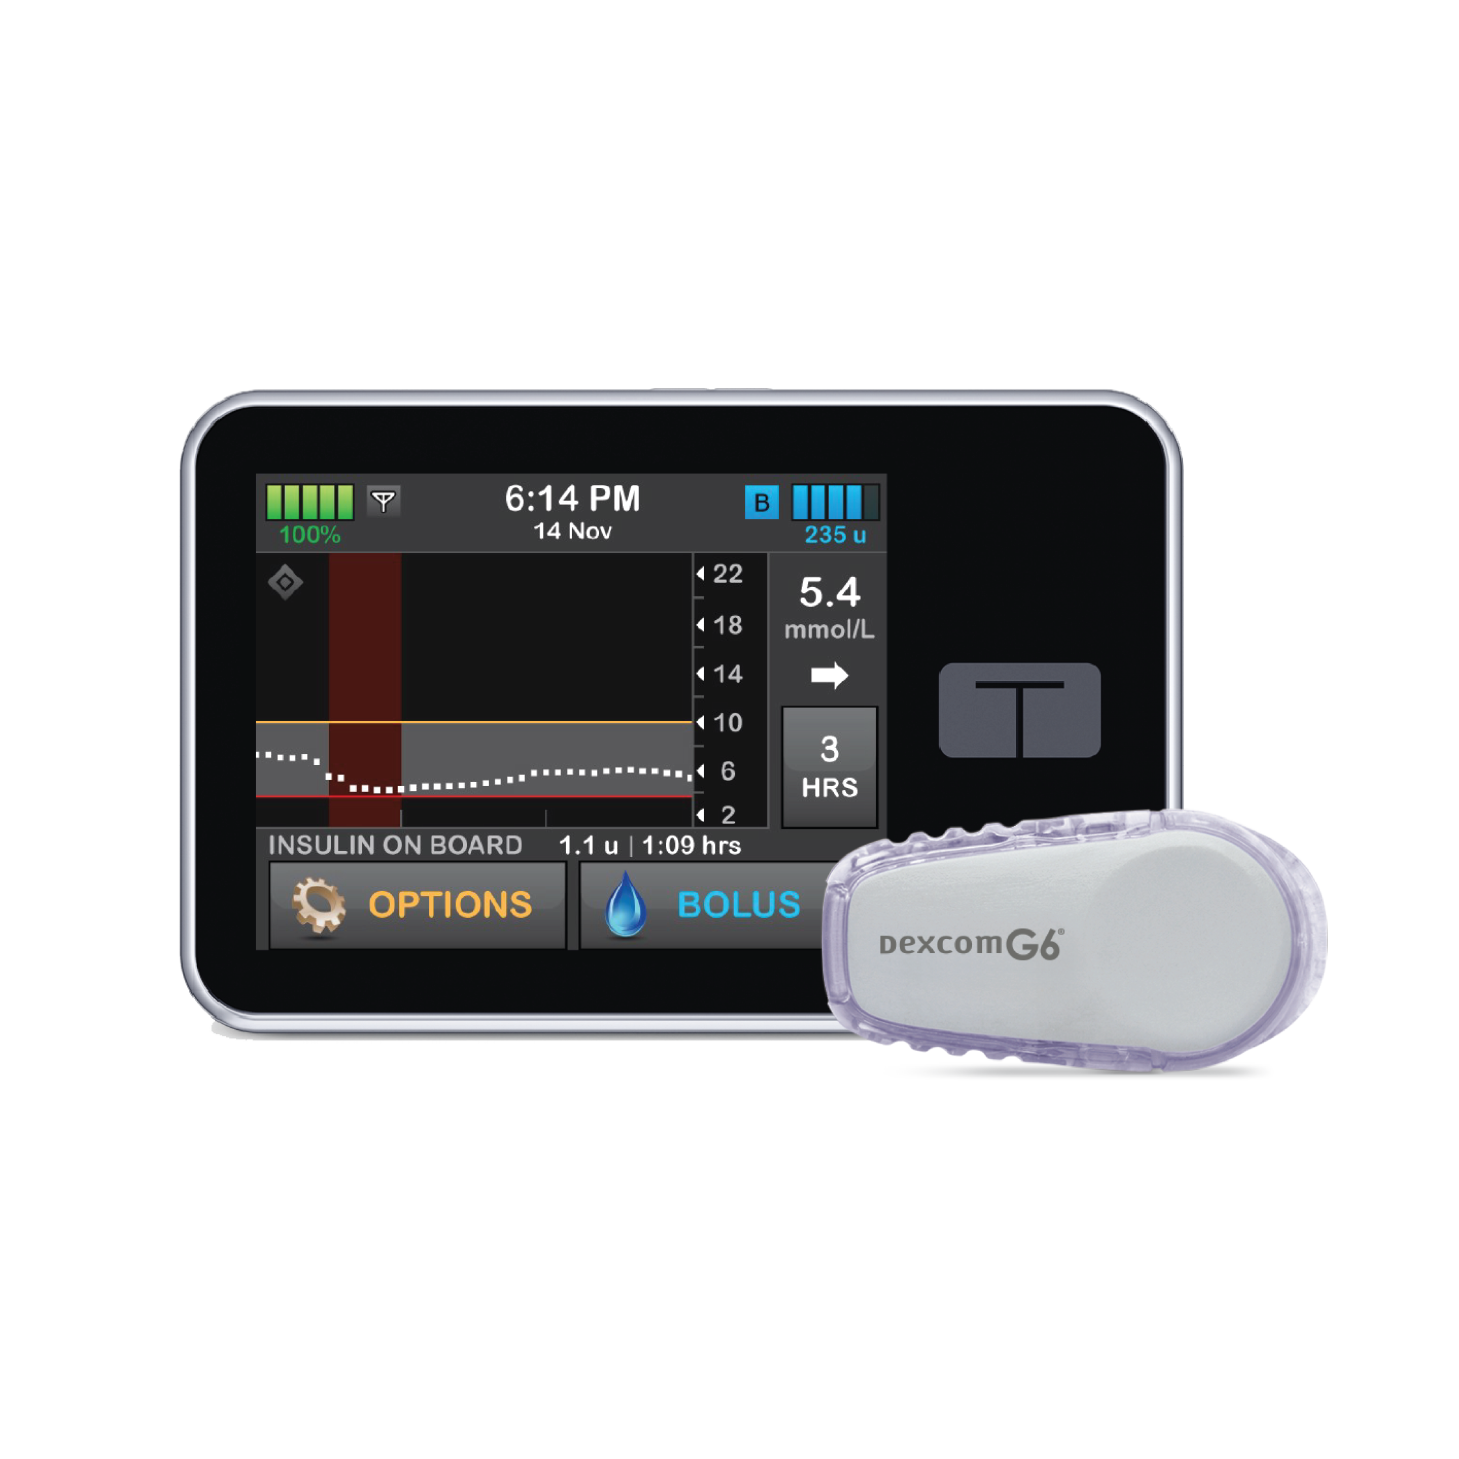 tslim X2™ Insulin Pump with NEW BasalIQ Technology AMSL Diabetes